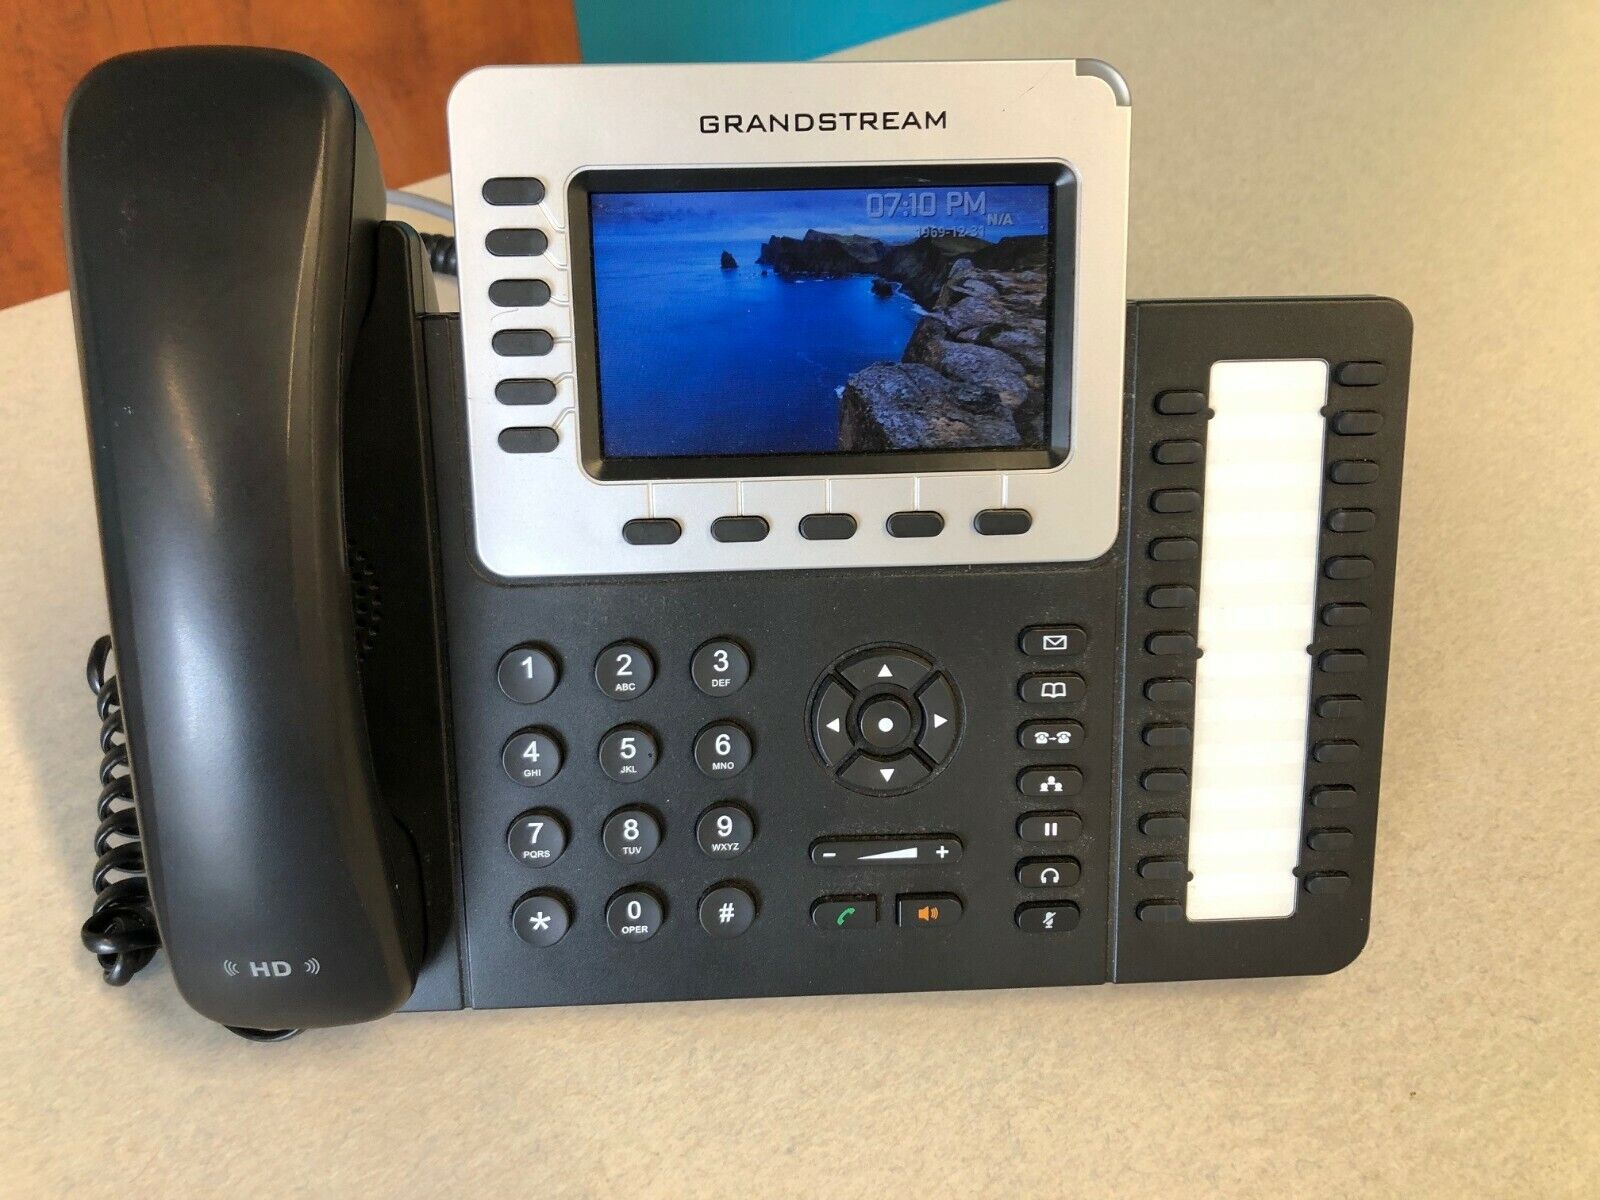 Grandstream GXP2160 Enterprise HD 6 Line VoIP Phone - Black